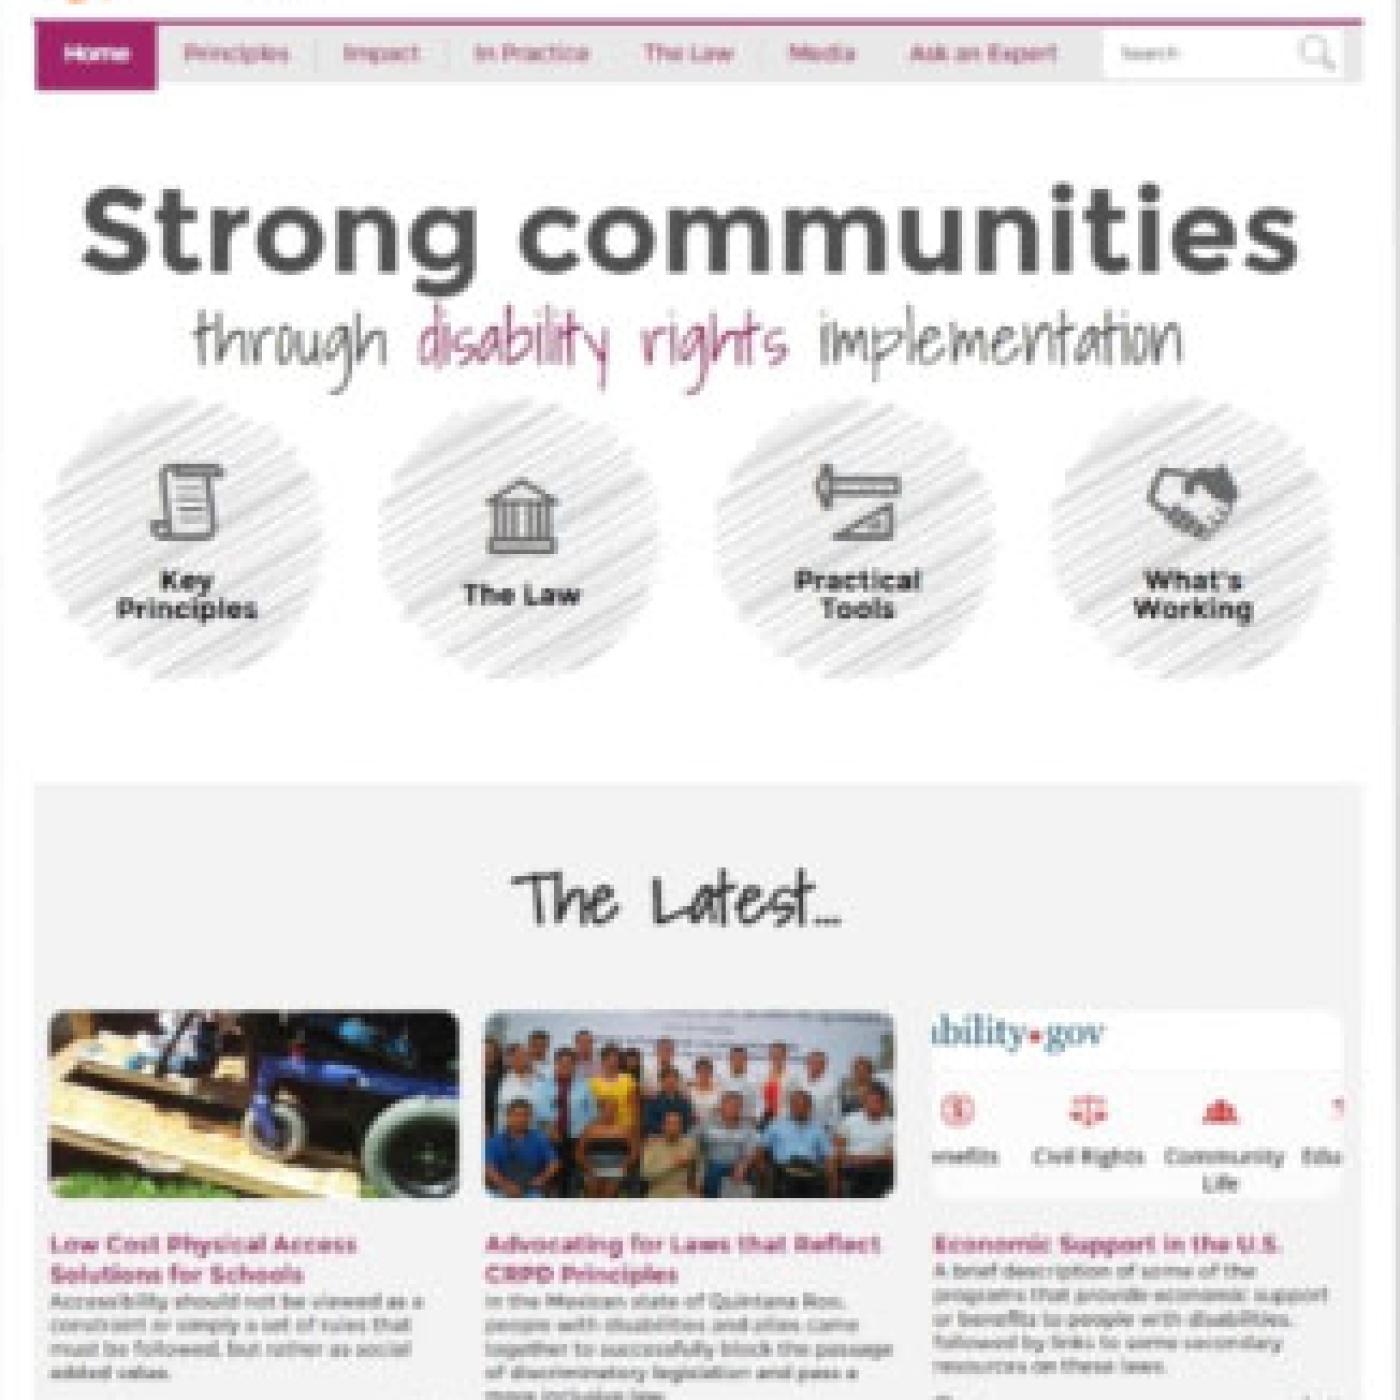 RightsNow! Homepage Screenshot Image